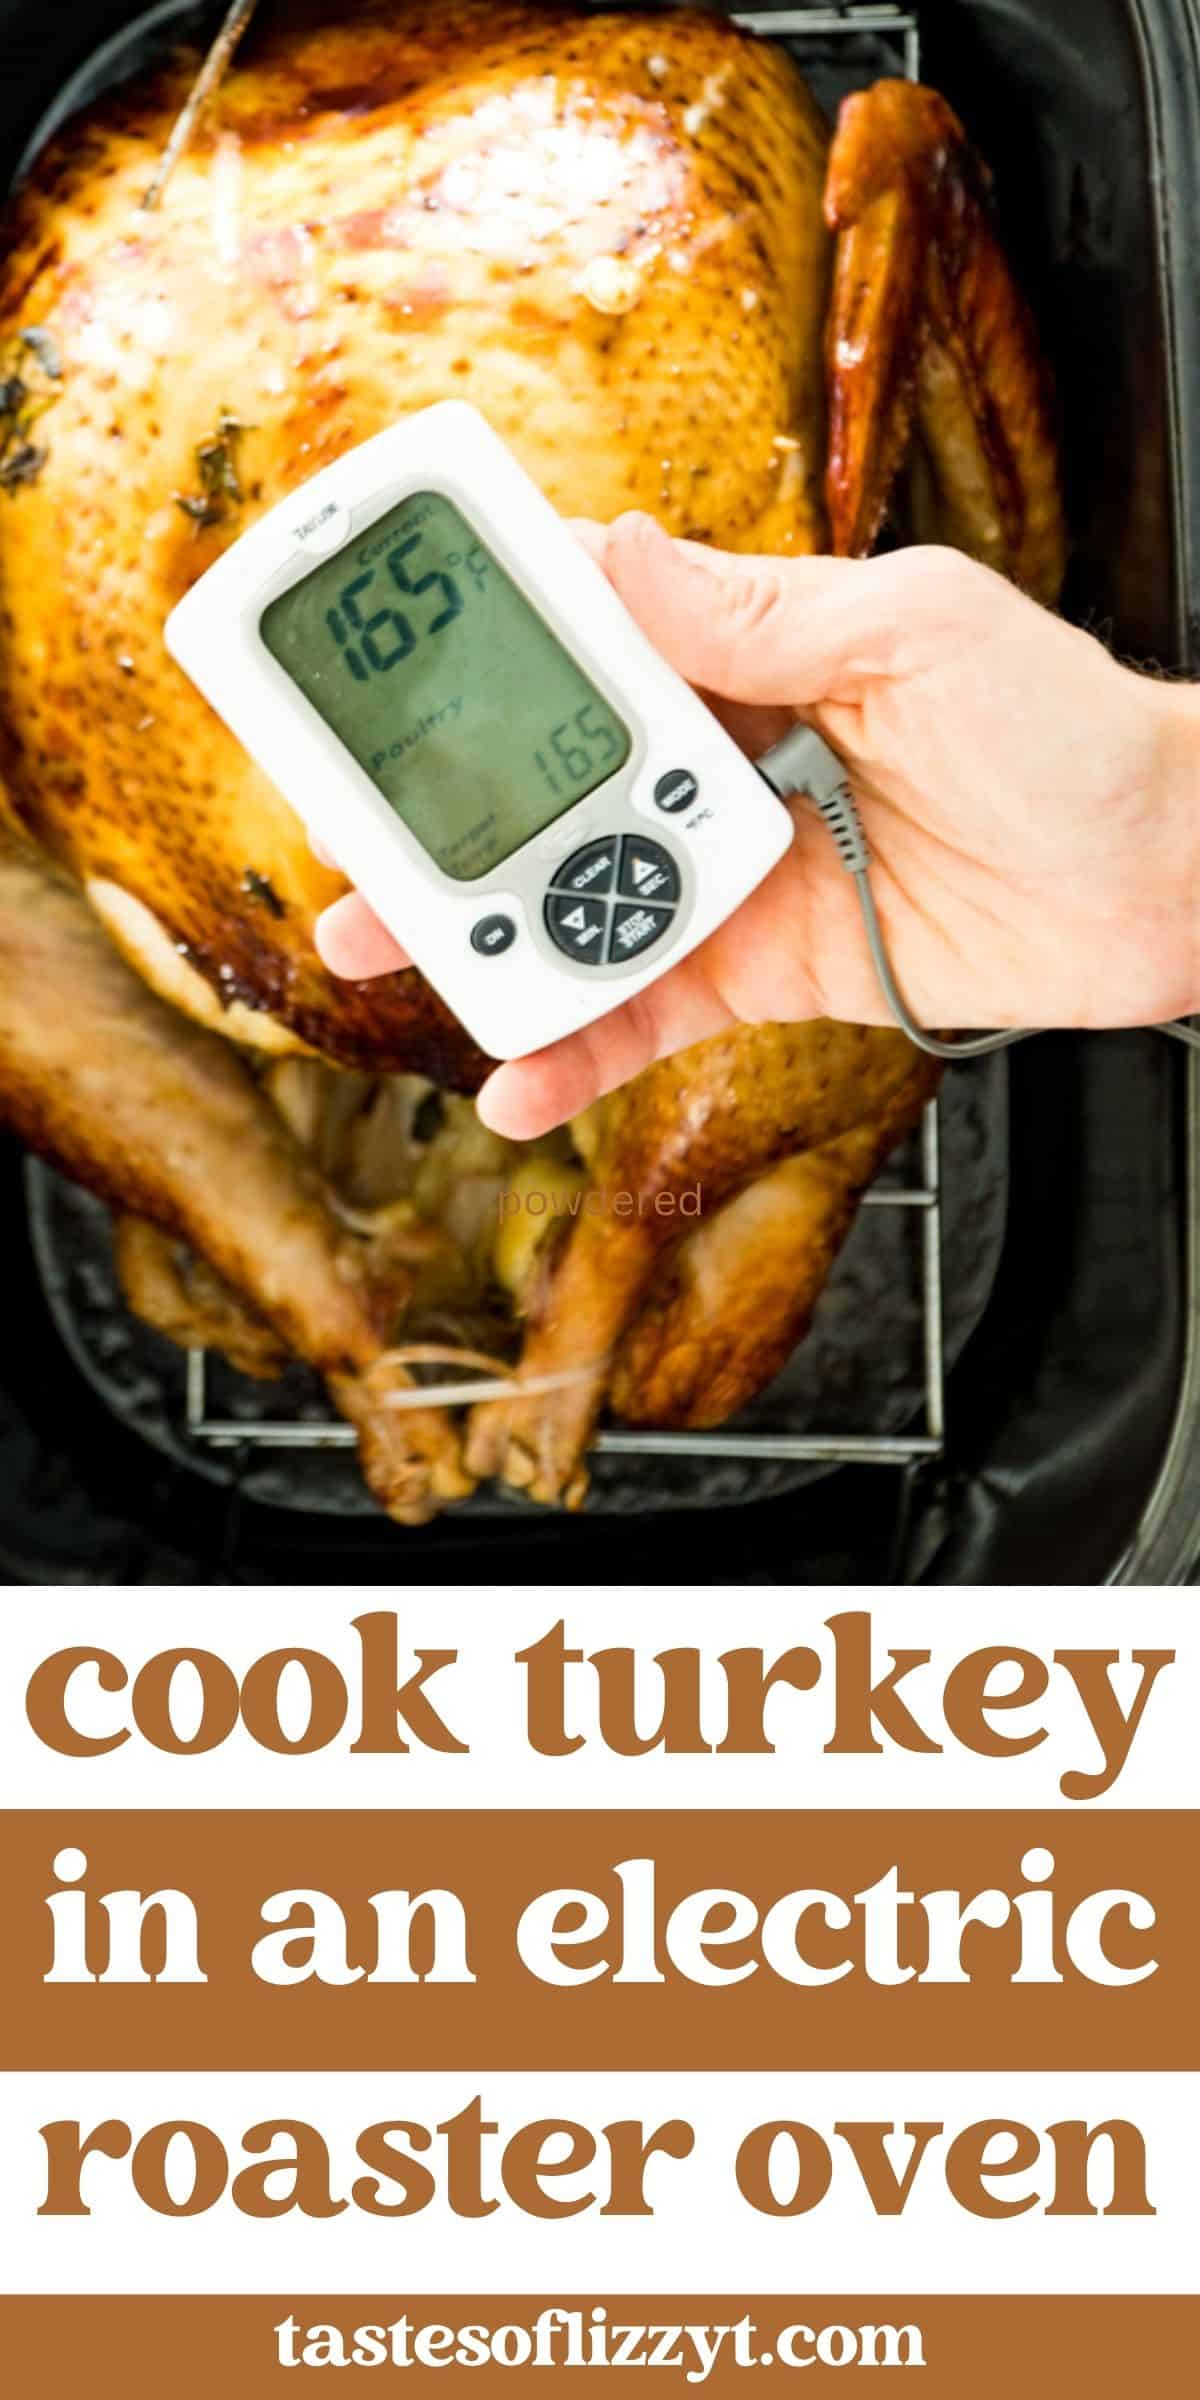 20 Quart Turkey Roaster Oven & Triple Slow Cooker Food Warmer